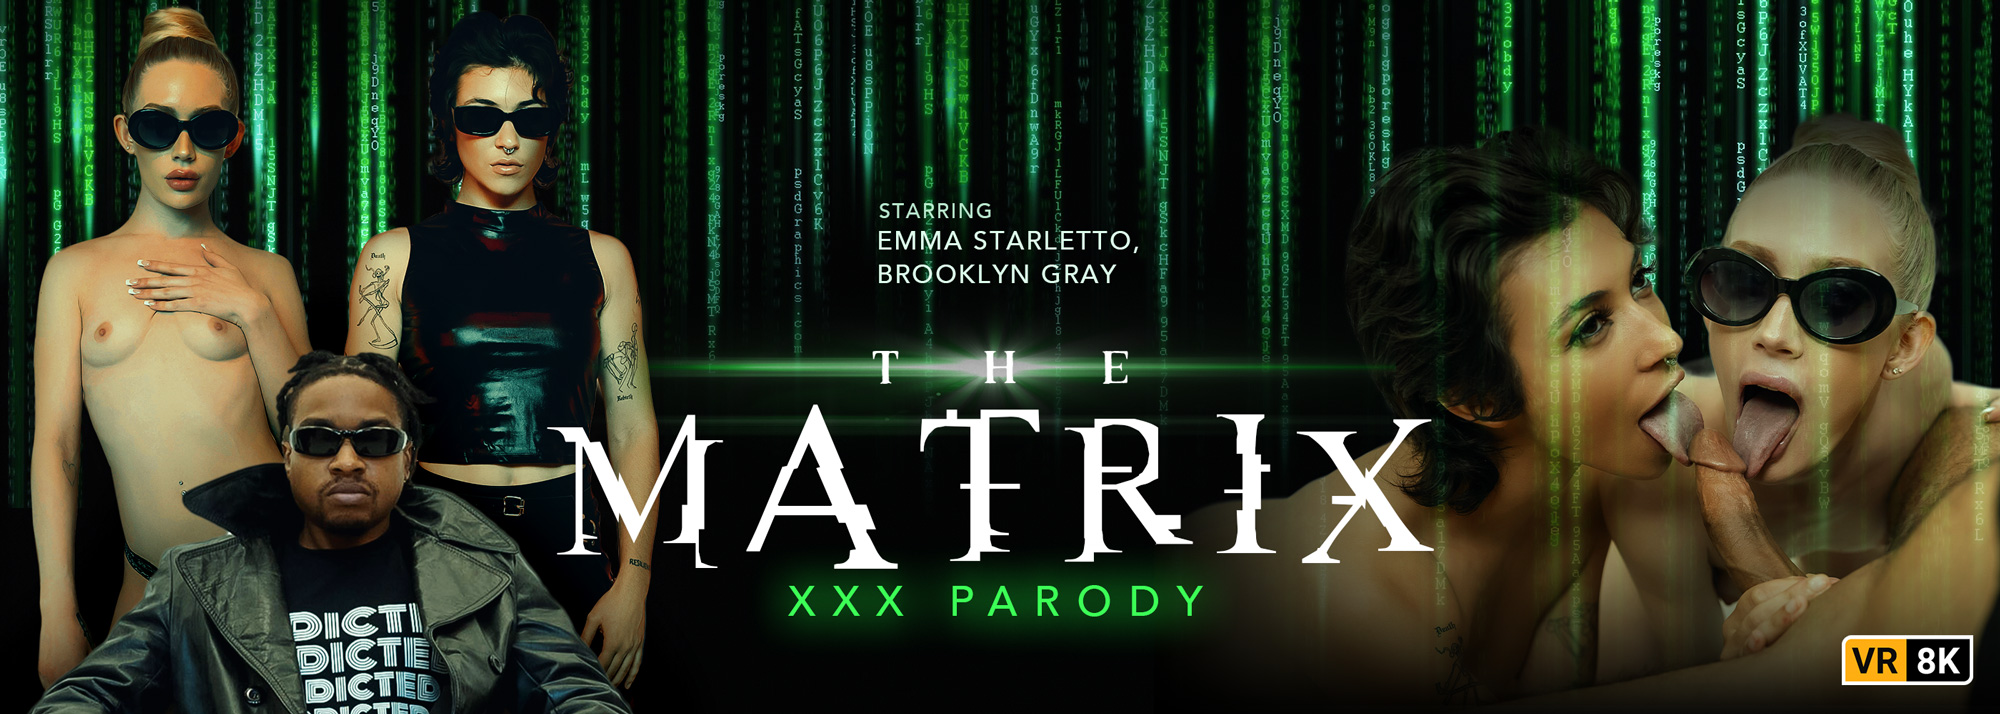 The Matrix XXX Parody starring Emma Starletto and Brooklyn Gray